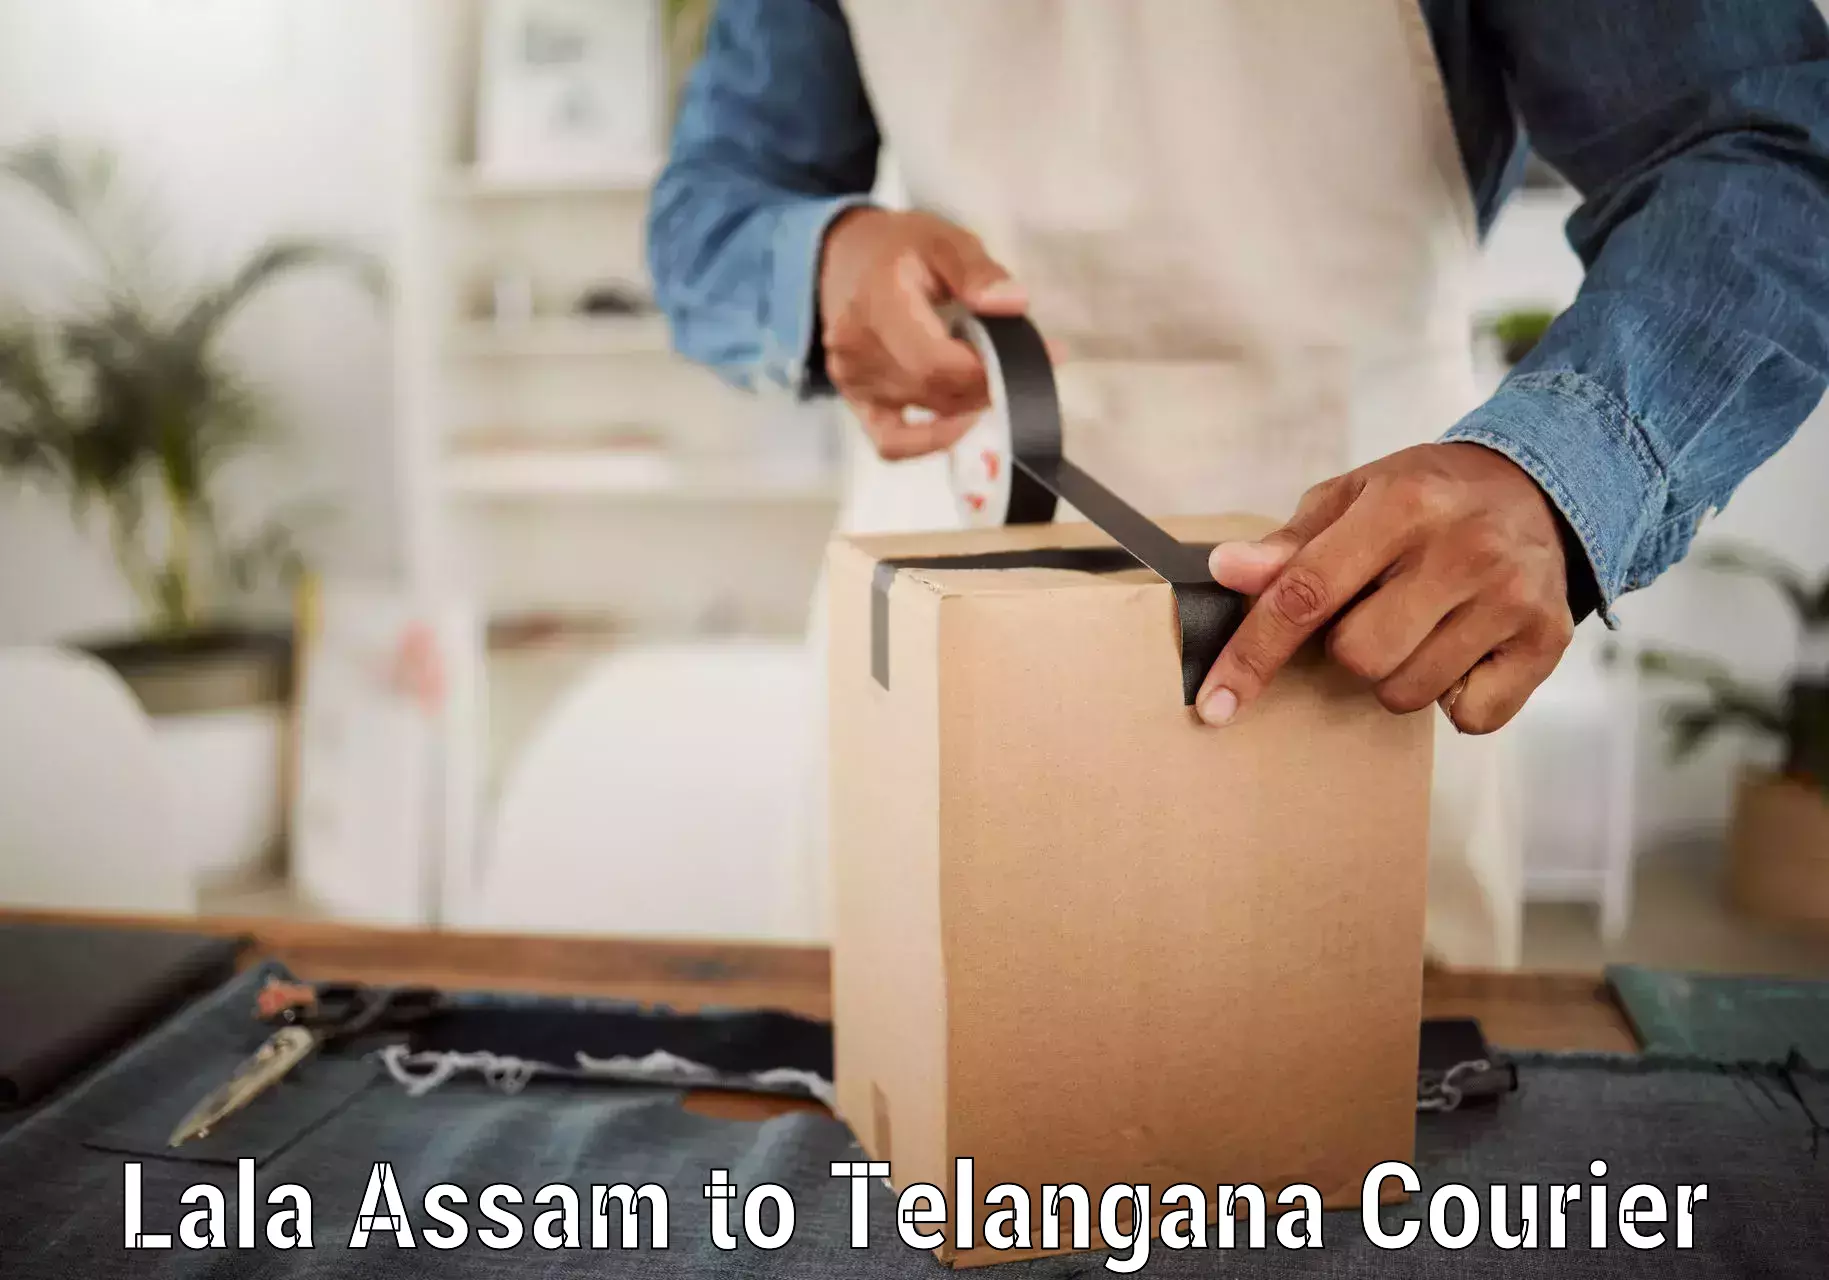 Efficient order fulfillment Lala Assam to Balanagar